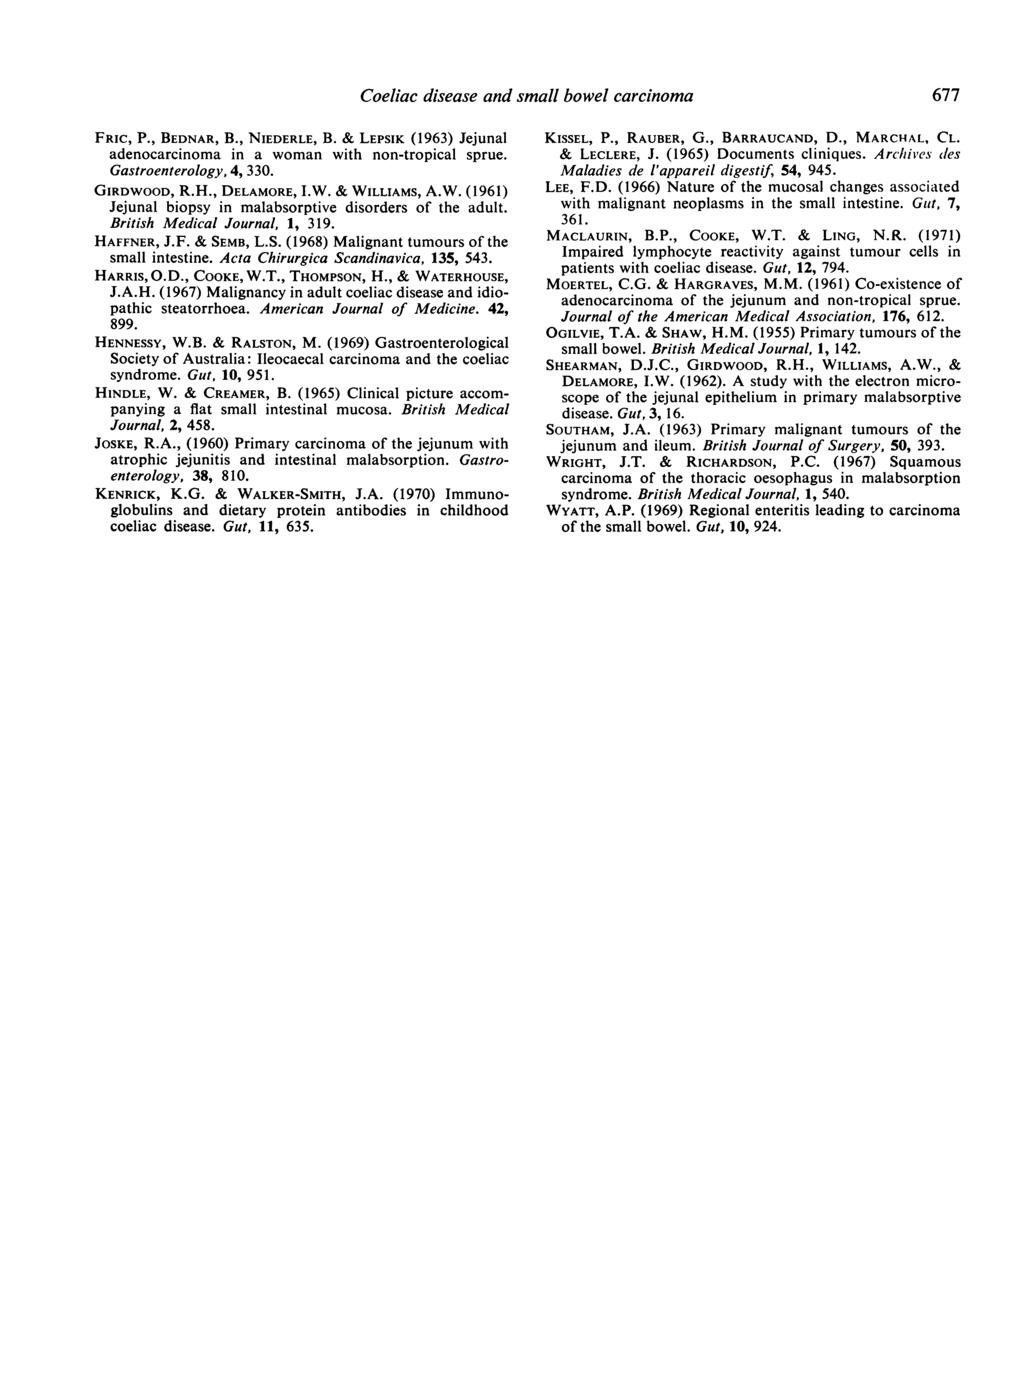 FRIC, P., BEDNAR, B., NIEDERLE, B. & LEPSIK (1963) Jejunal adenocarcinoma in a woman with non-tropical sprue. Gastroenterology, 4, 330. GIRDWO